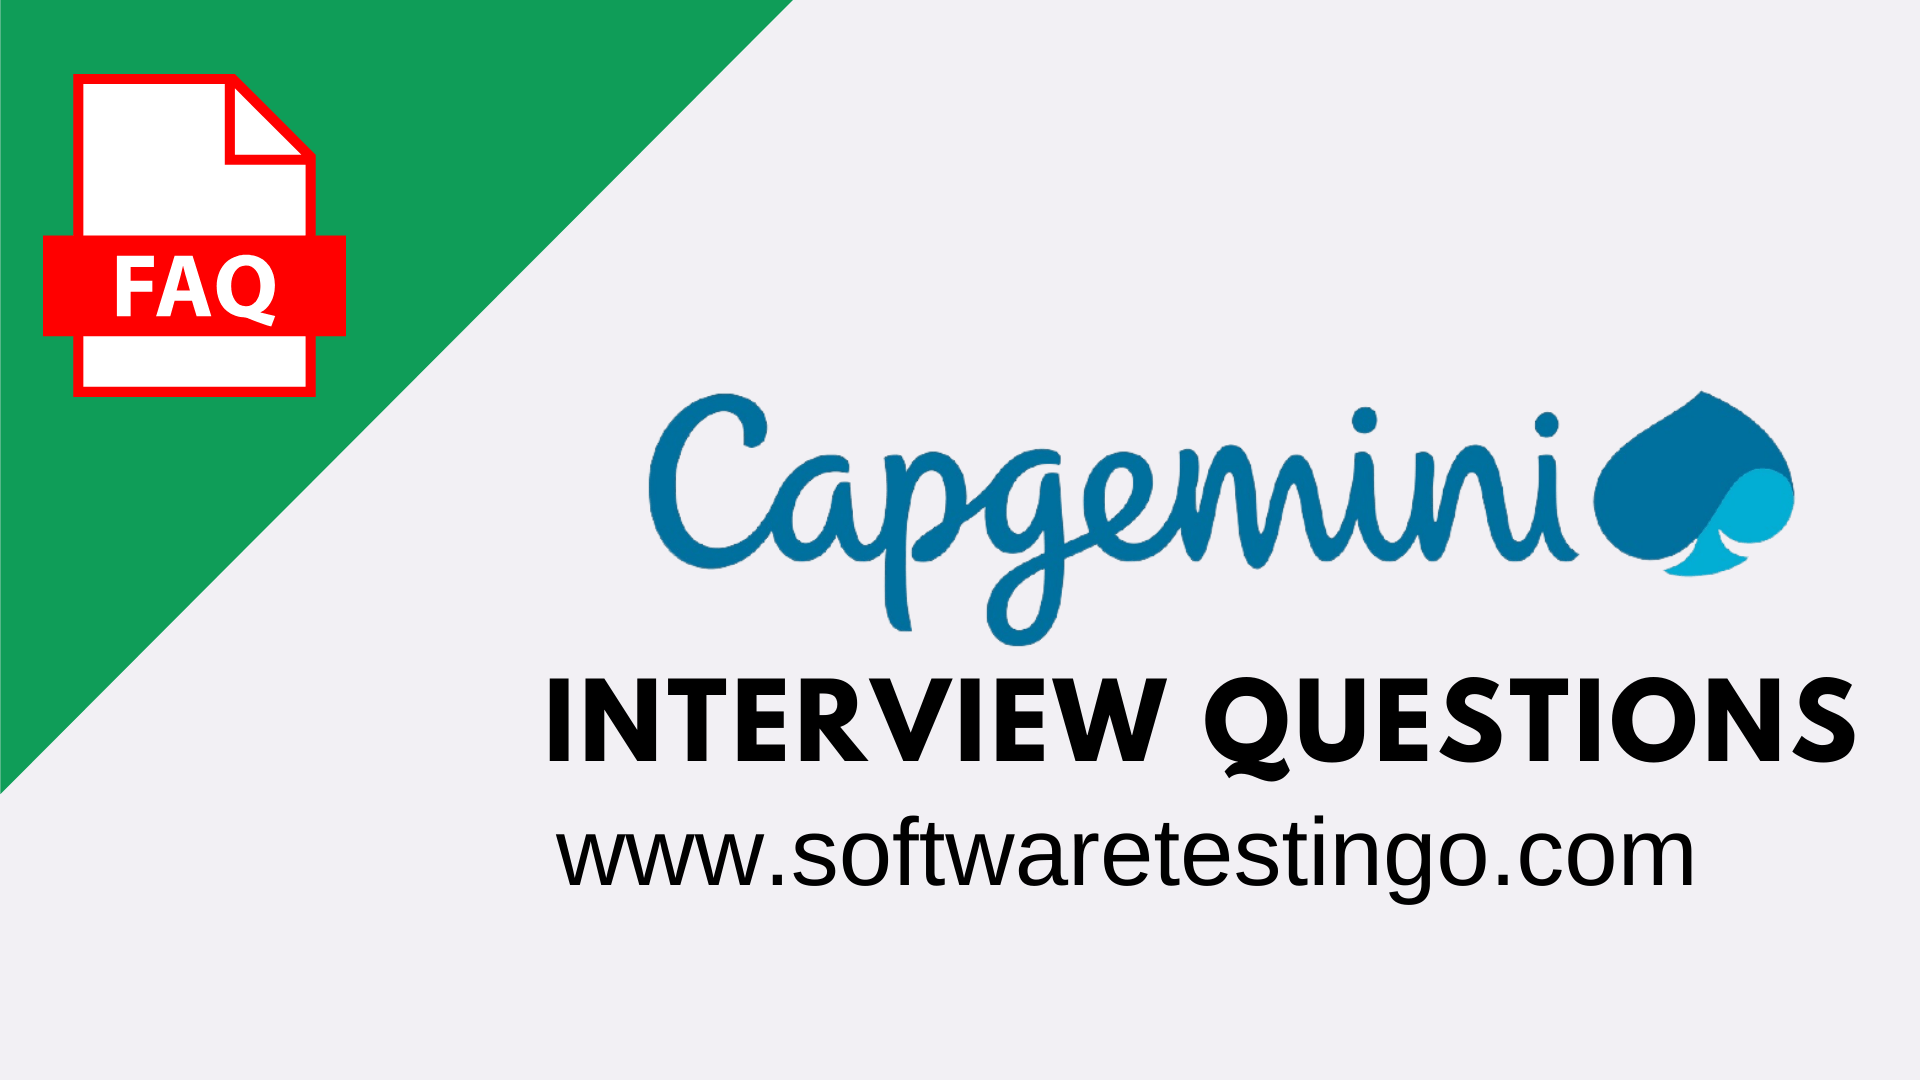 Capgemini Manual Interview Questions